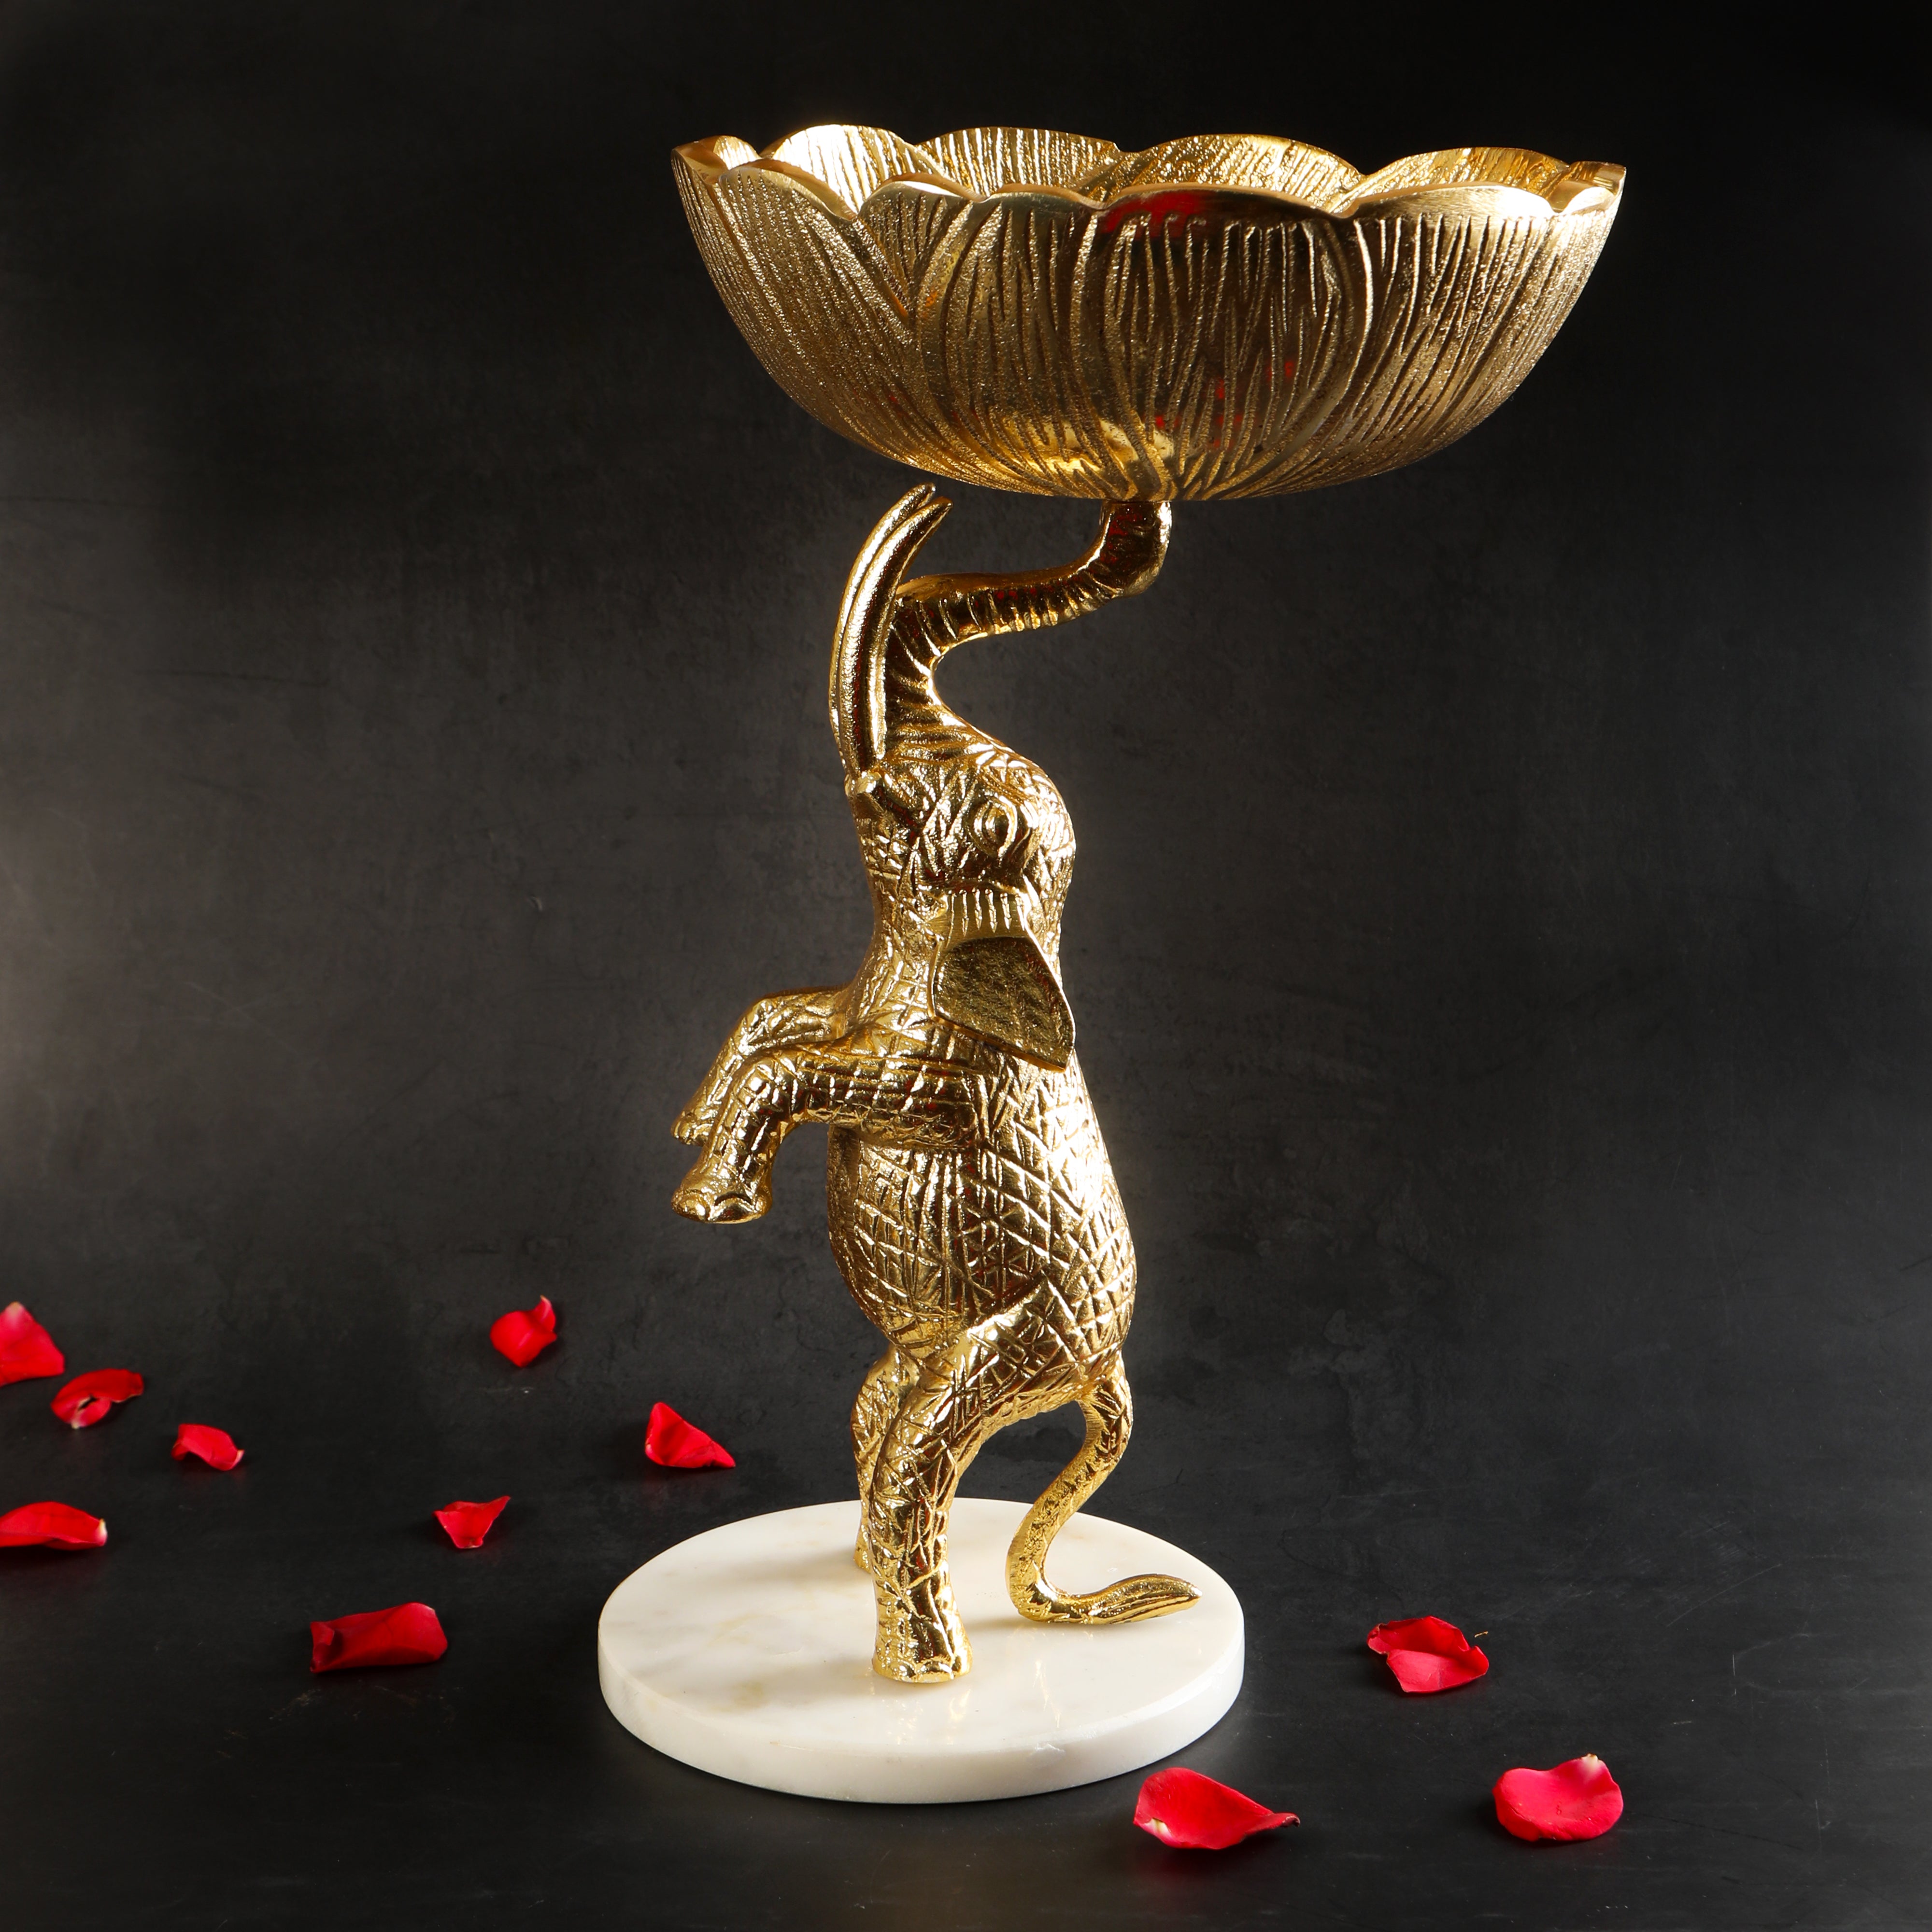 Diwali Hamper - Gold Plated Elephant Decorative Bowl